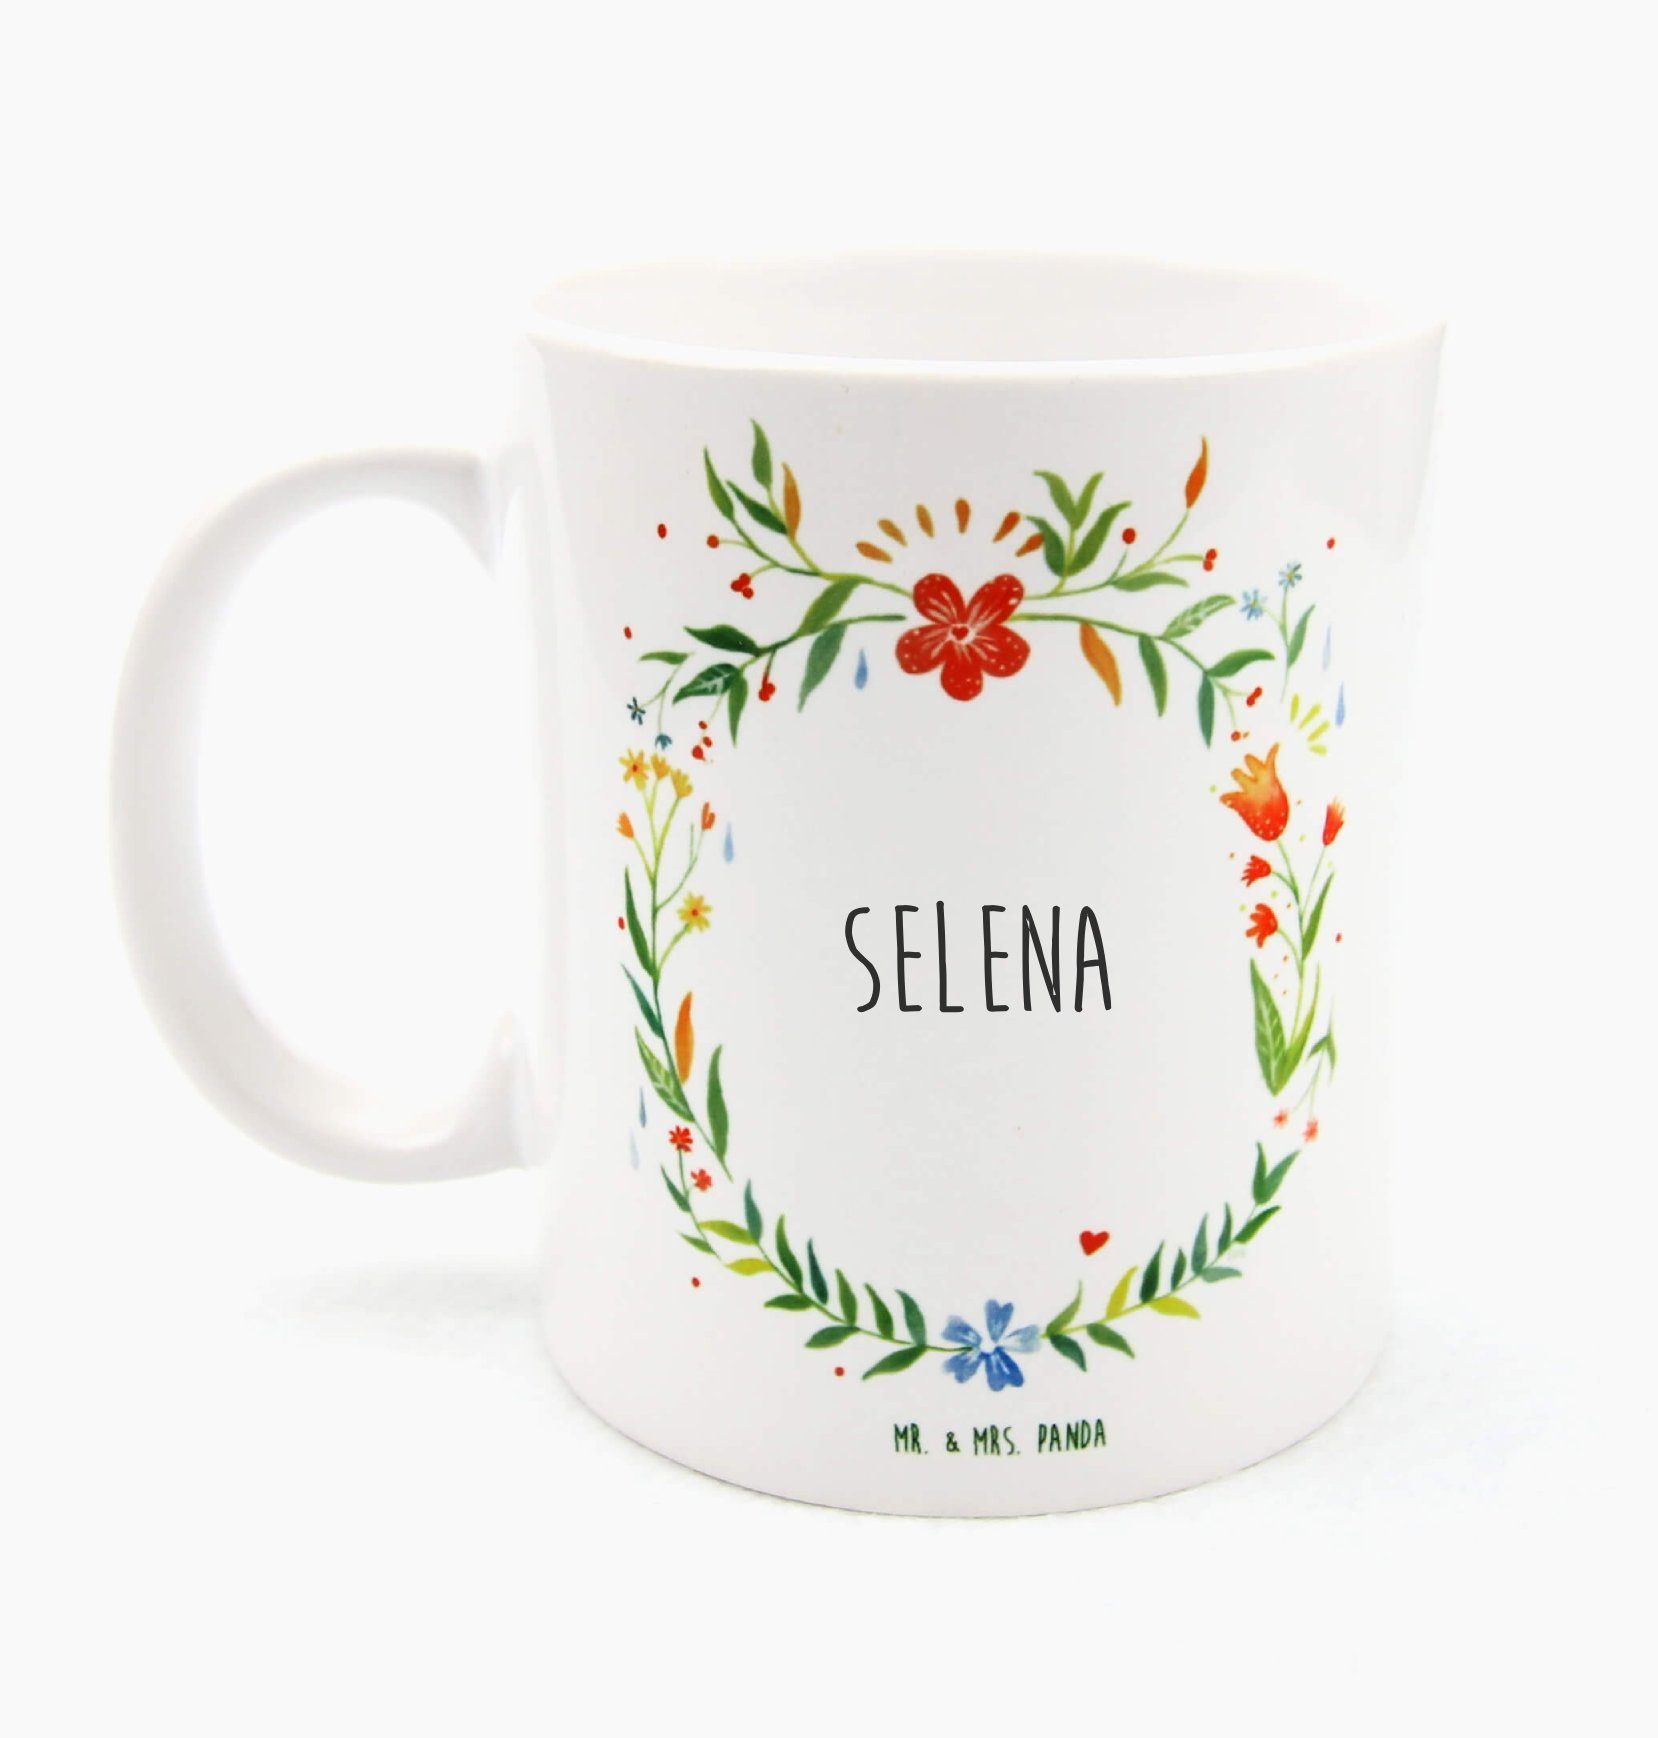 Mr. & Mrs. Panda Tasse Selena - Geschenk, Kaffeetasse, Teebecher, Becher, Teetasse, Tasse Mo, Keramik